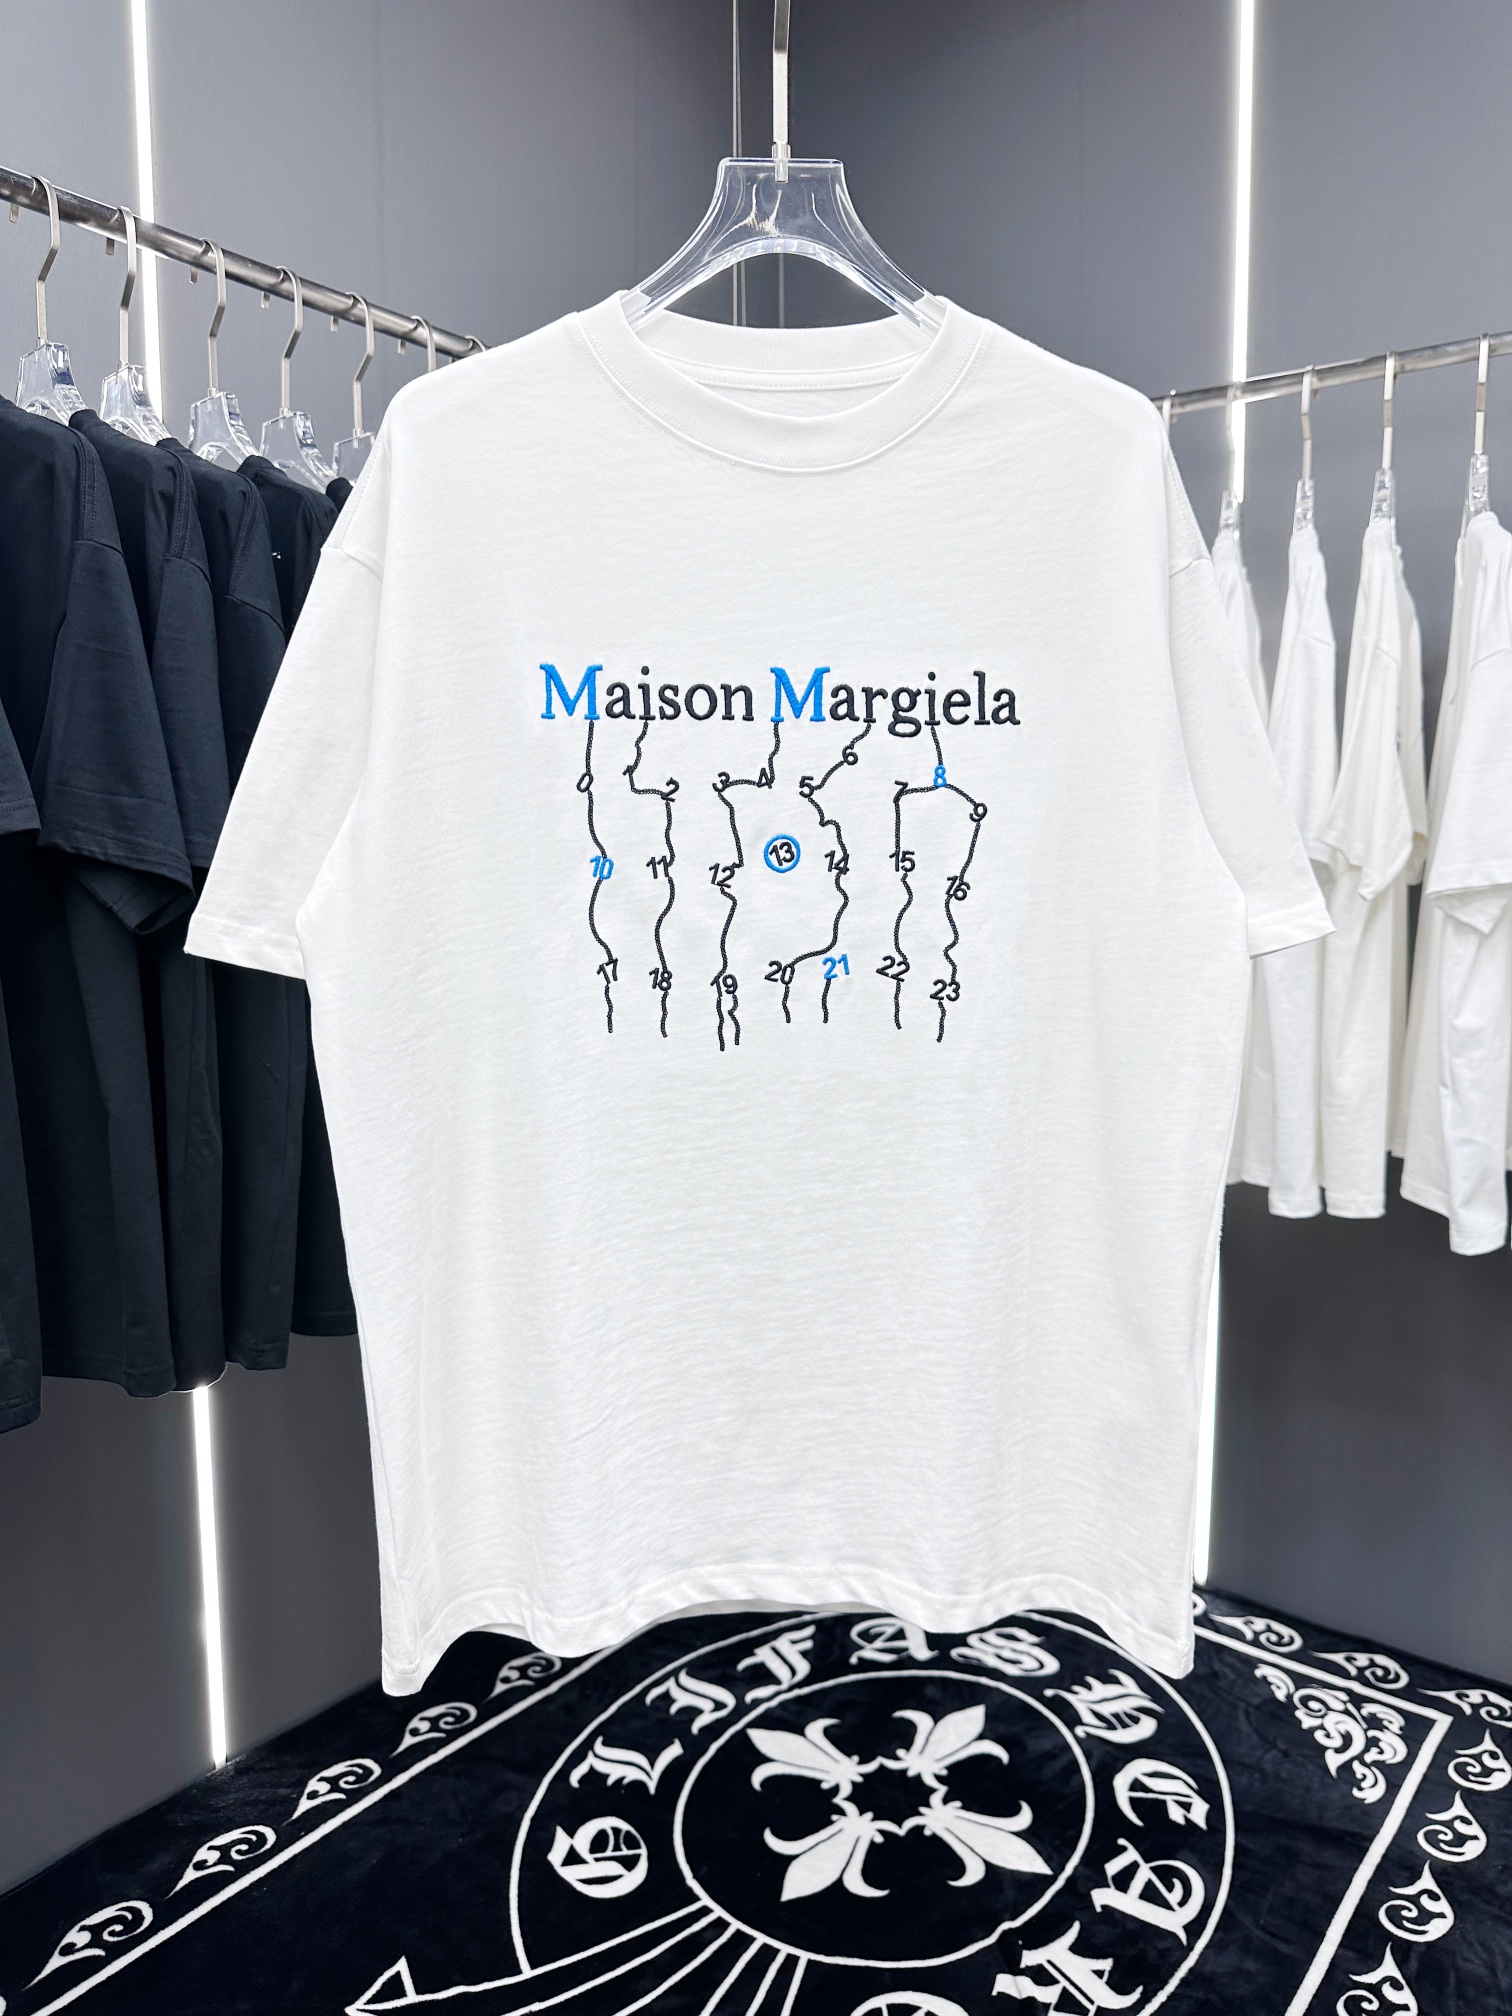 Maison Margiela Clothing T-Shirt Black White Embroidery Unisex Cotton Spring/Summer Collection Short Sleeve